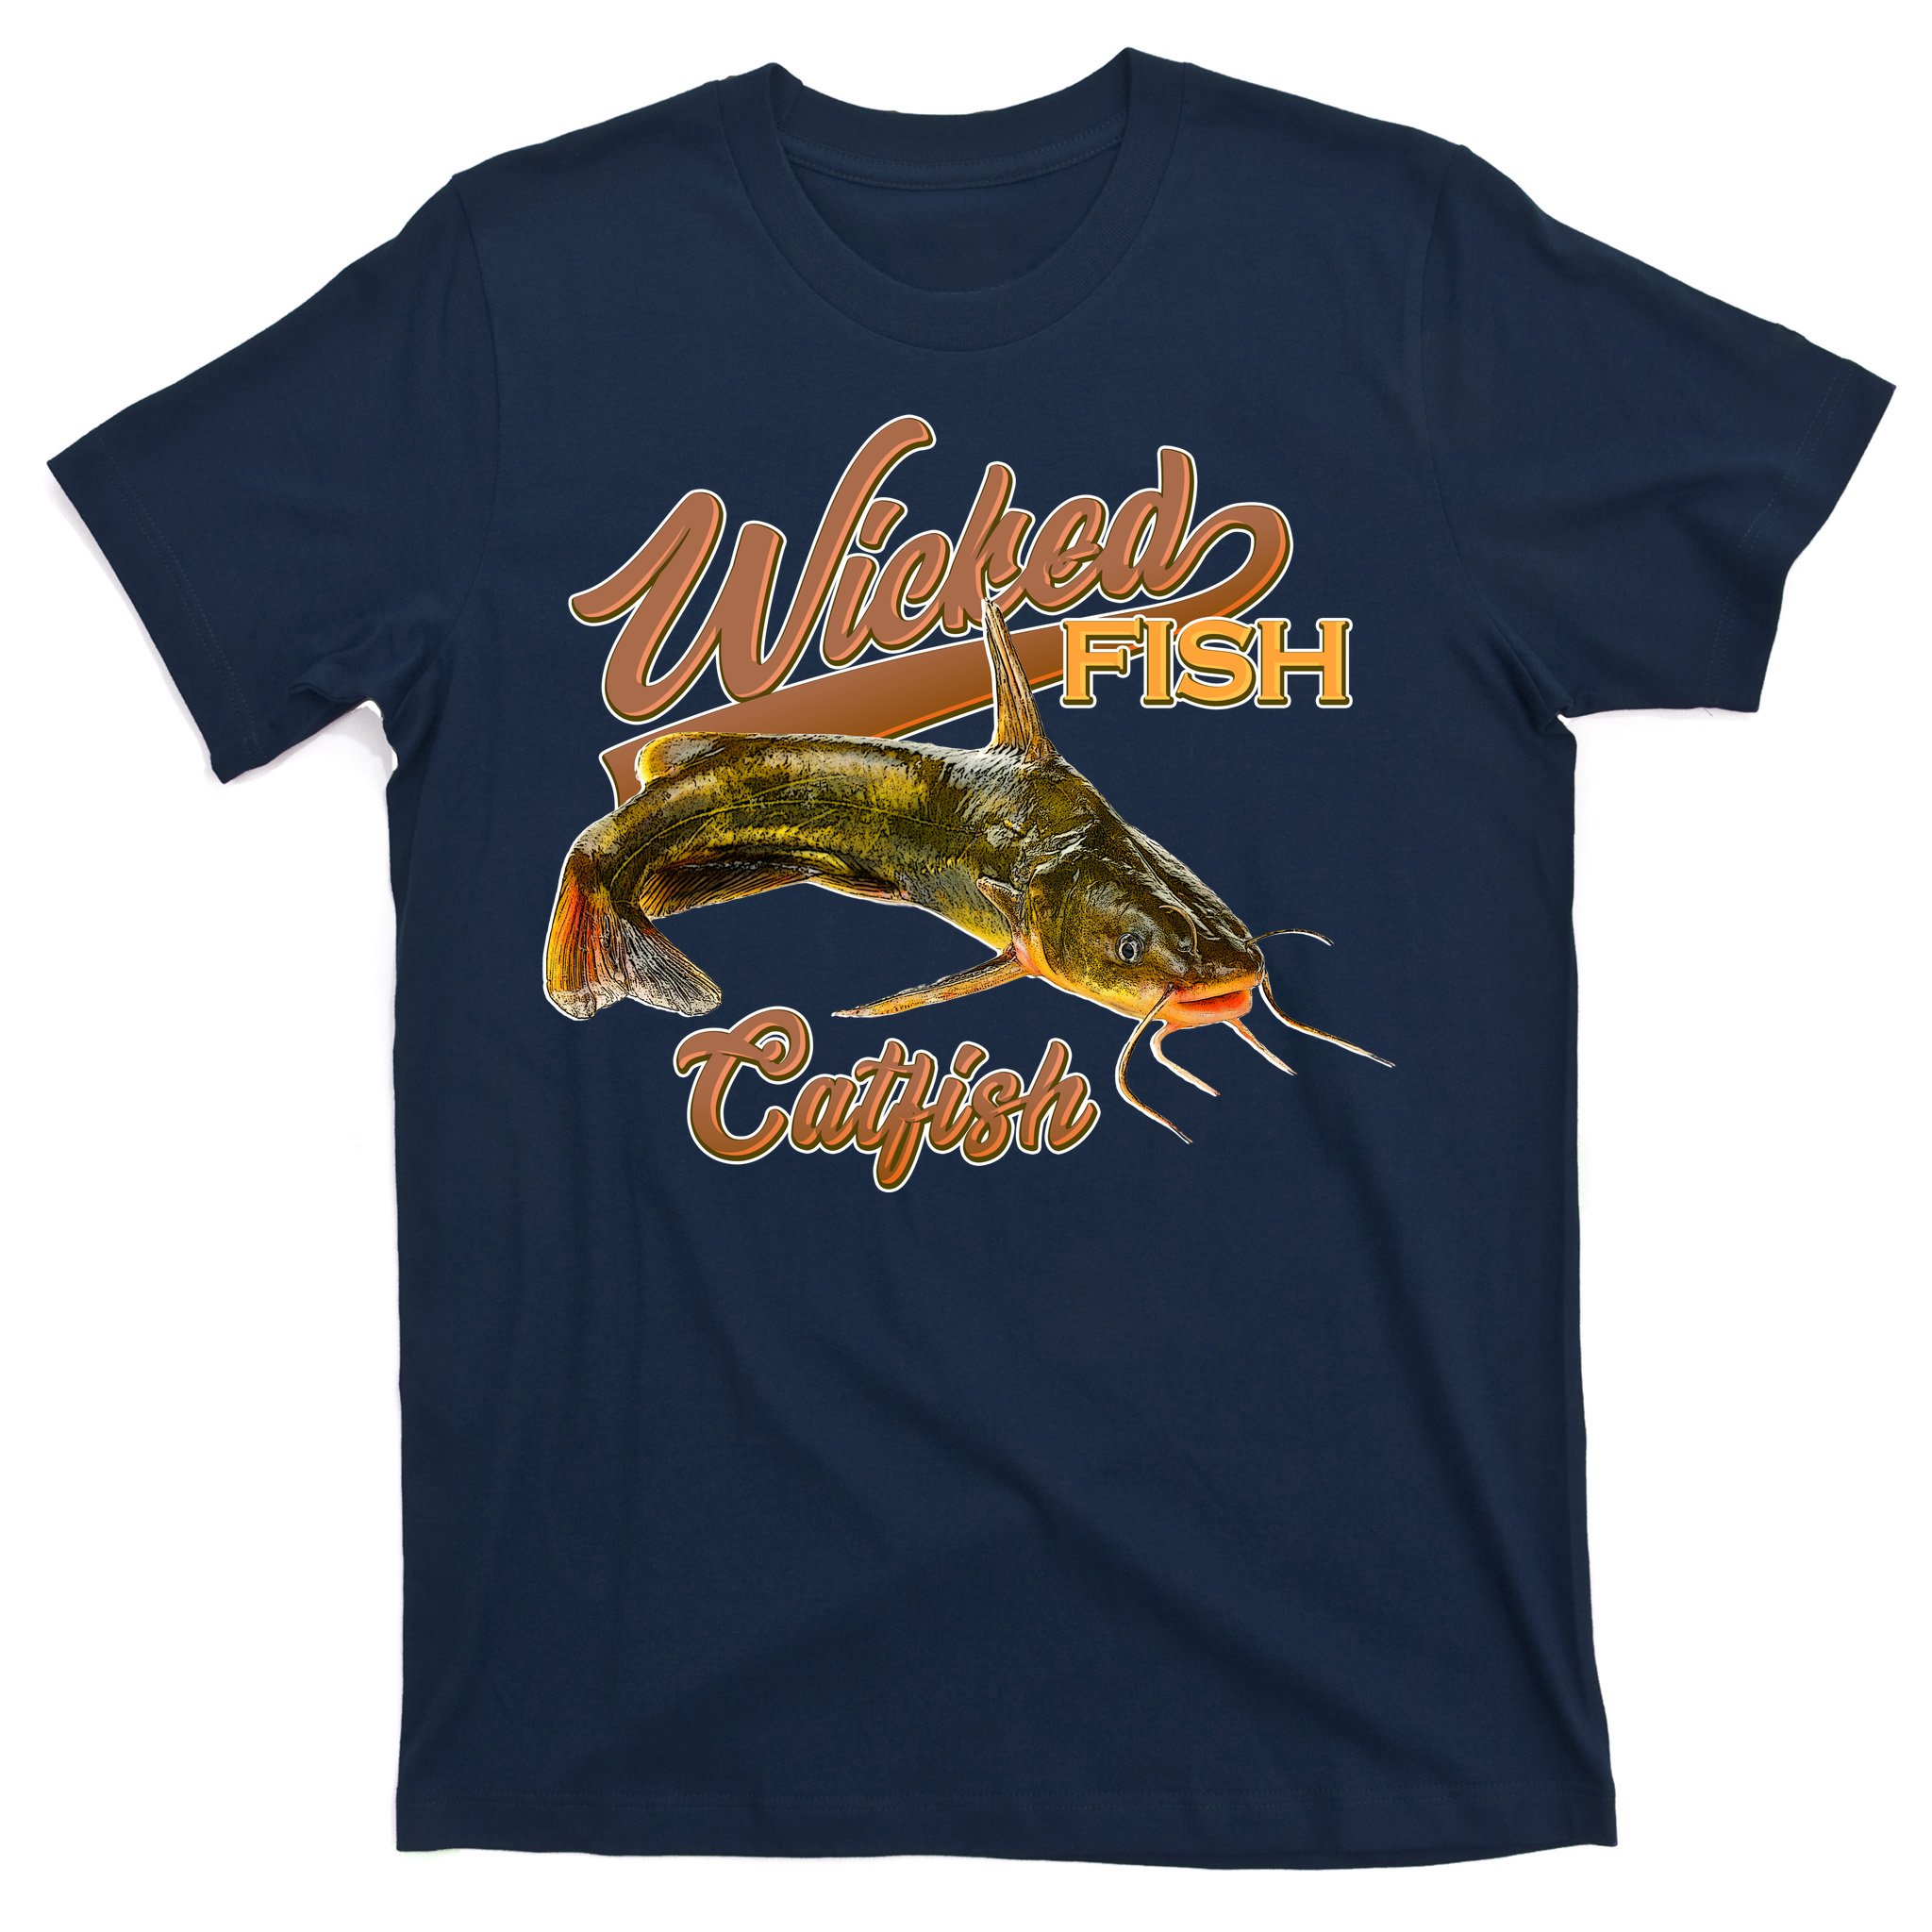 Wicked Fish Catfish Fishing T-Shirt